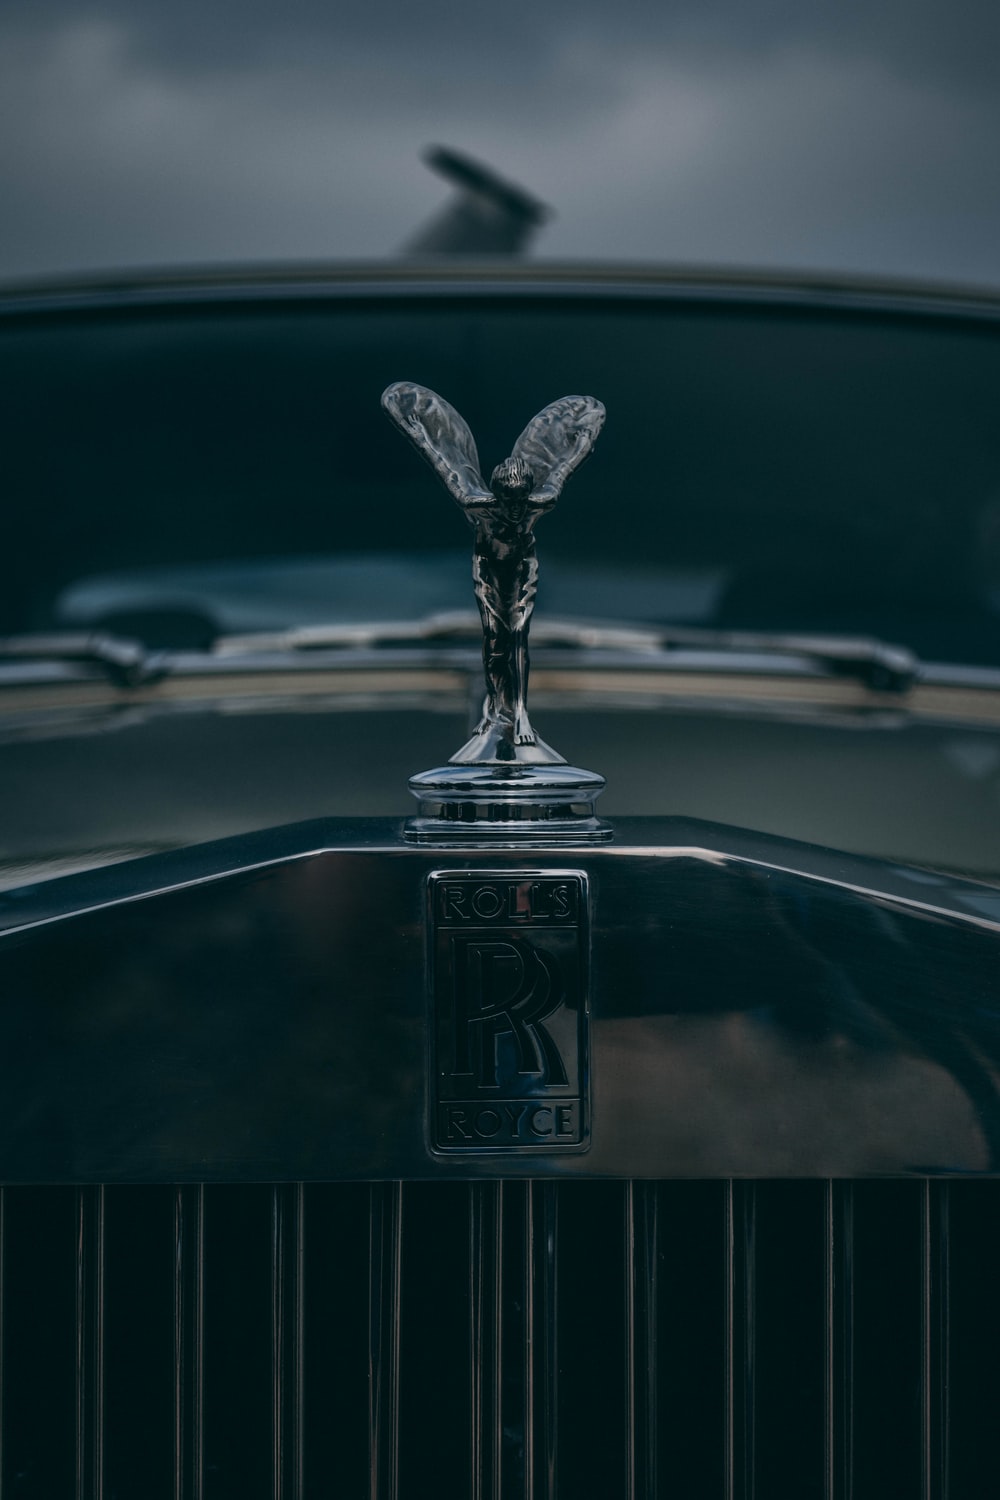 Rolls Royce Phantom Pictures Image